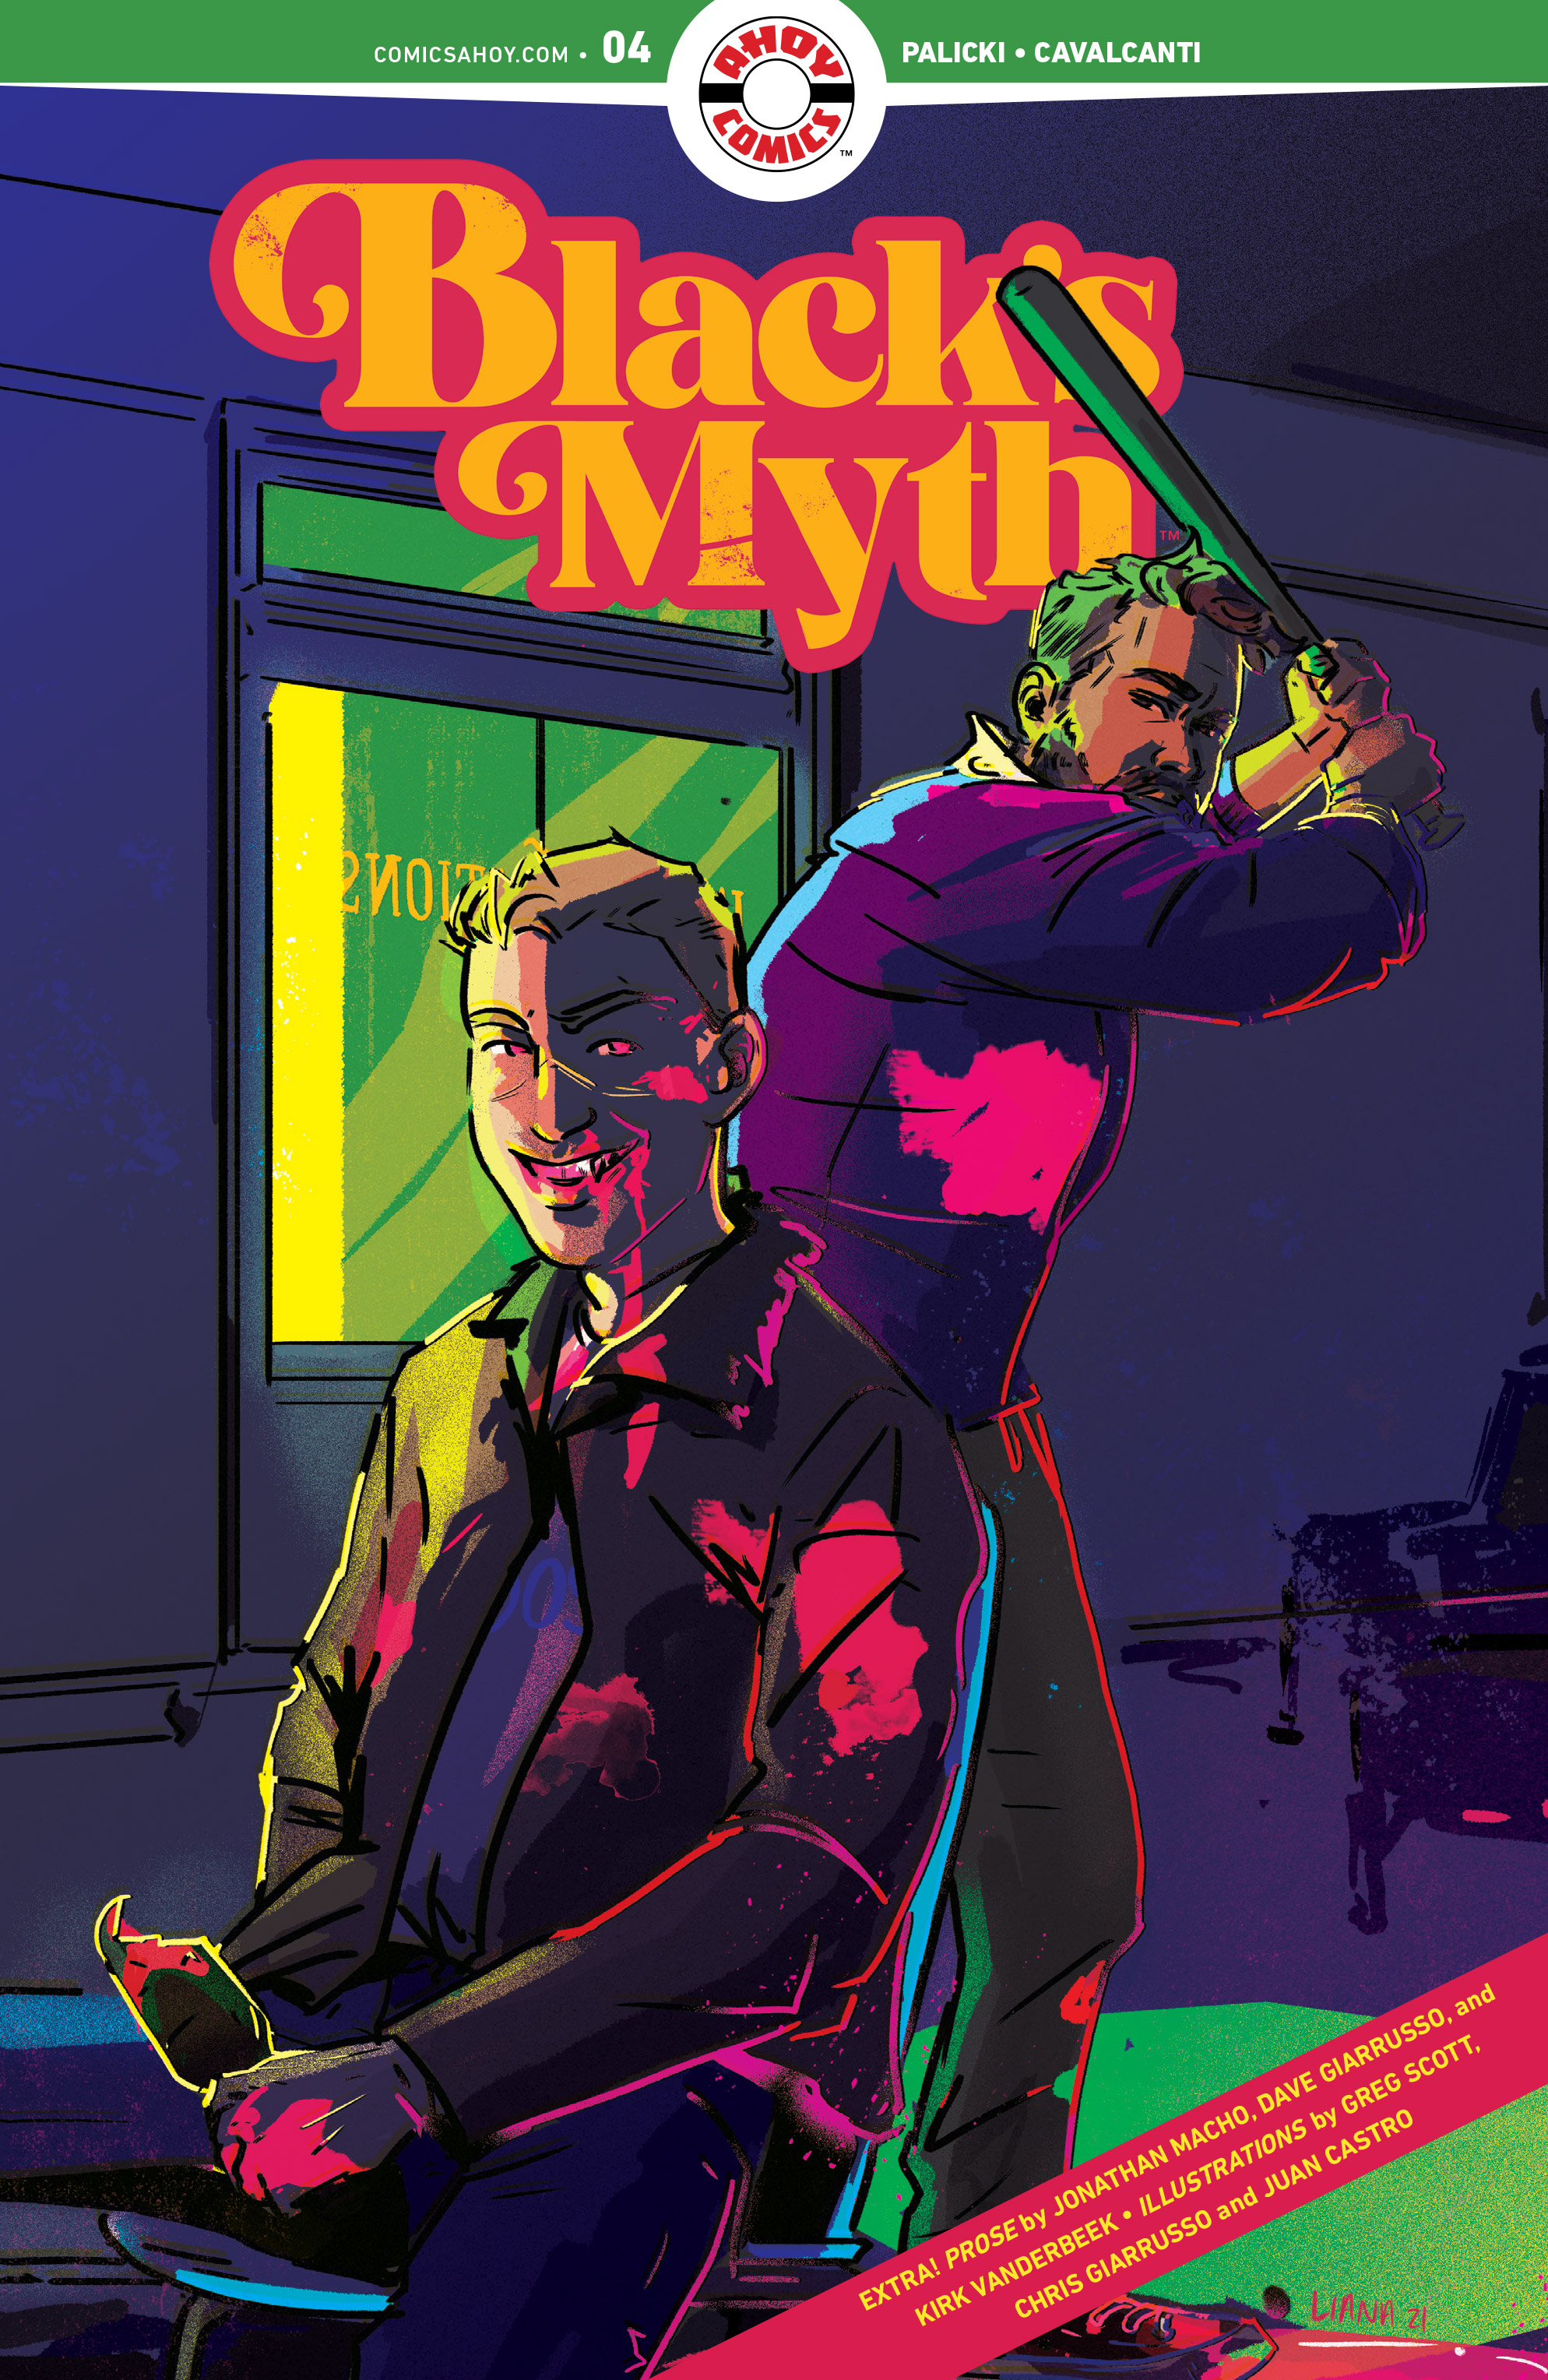 Read online Black's Myth comic -  Issue #4 - 1